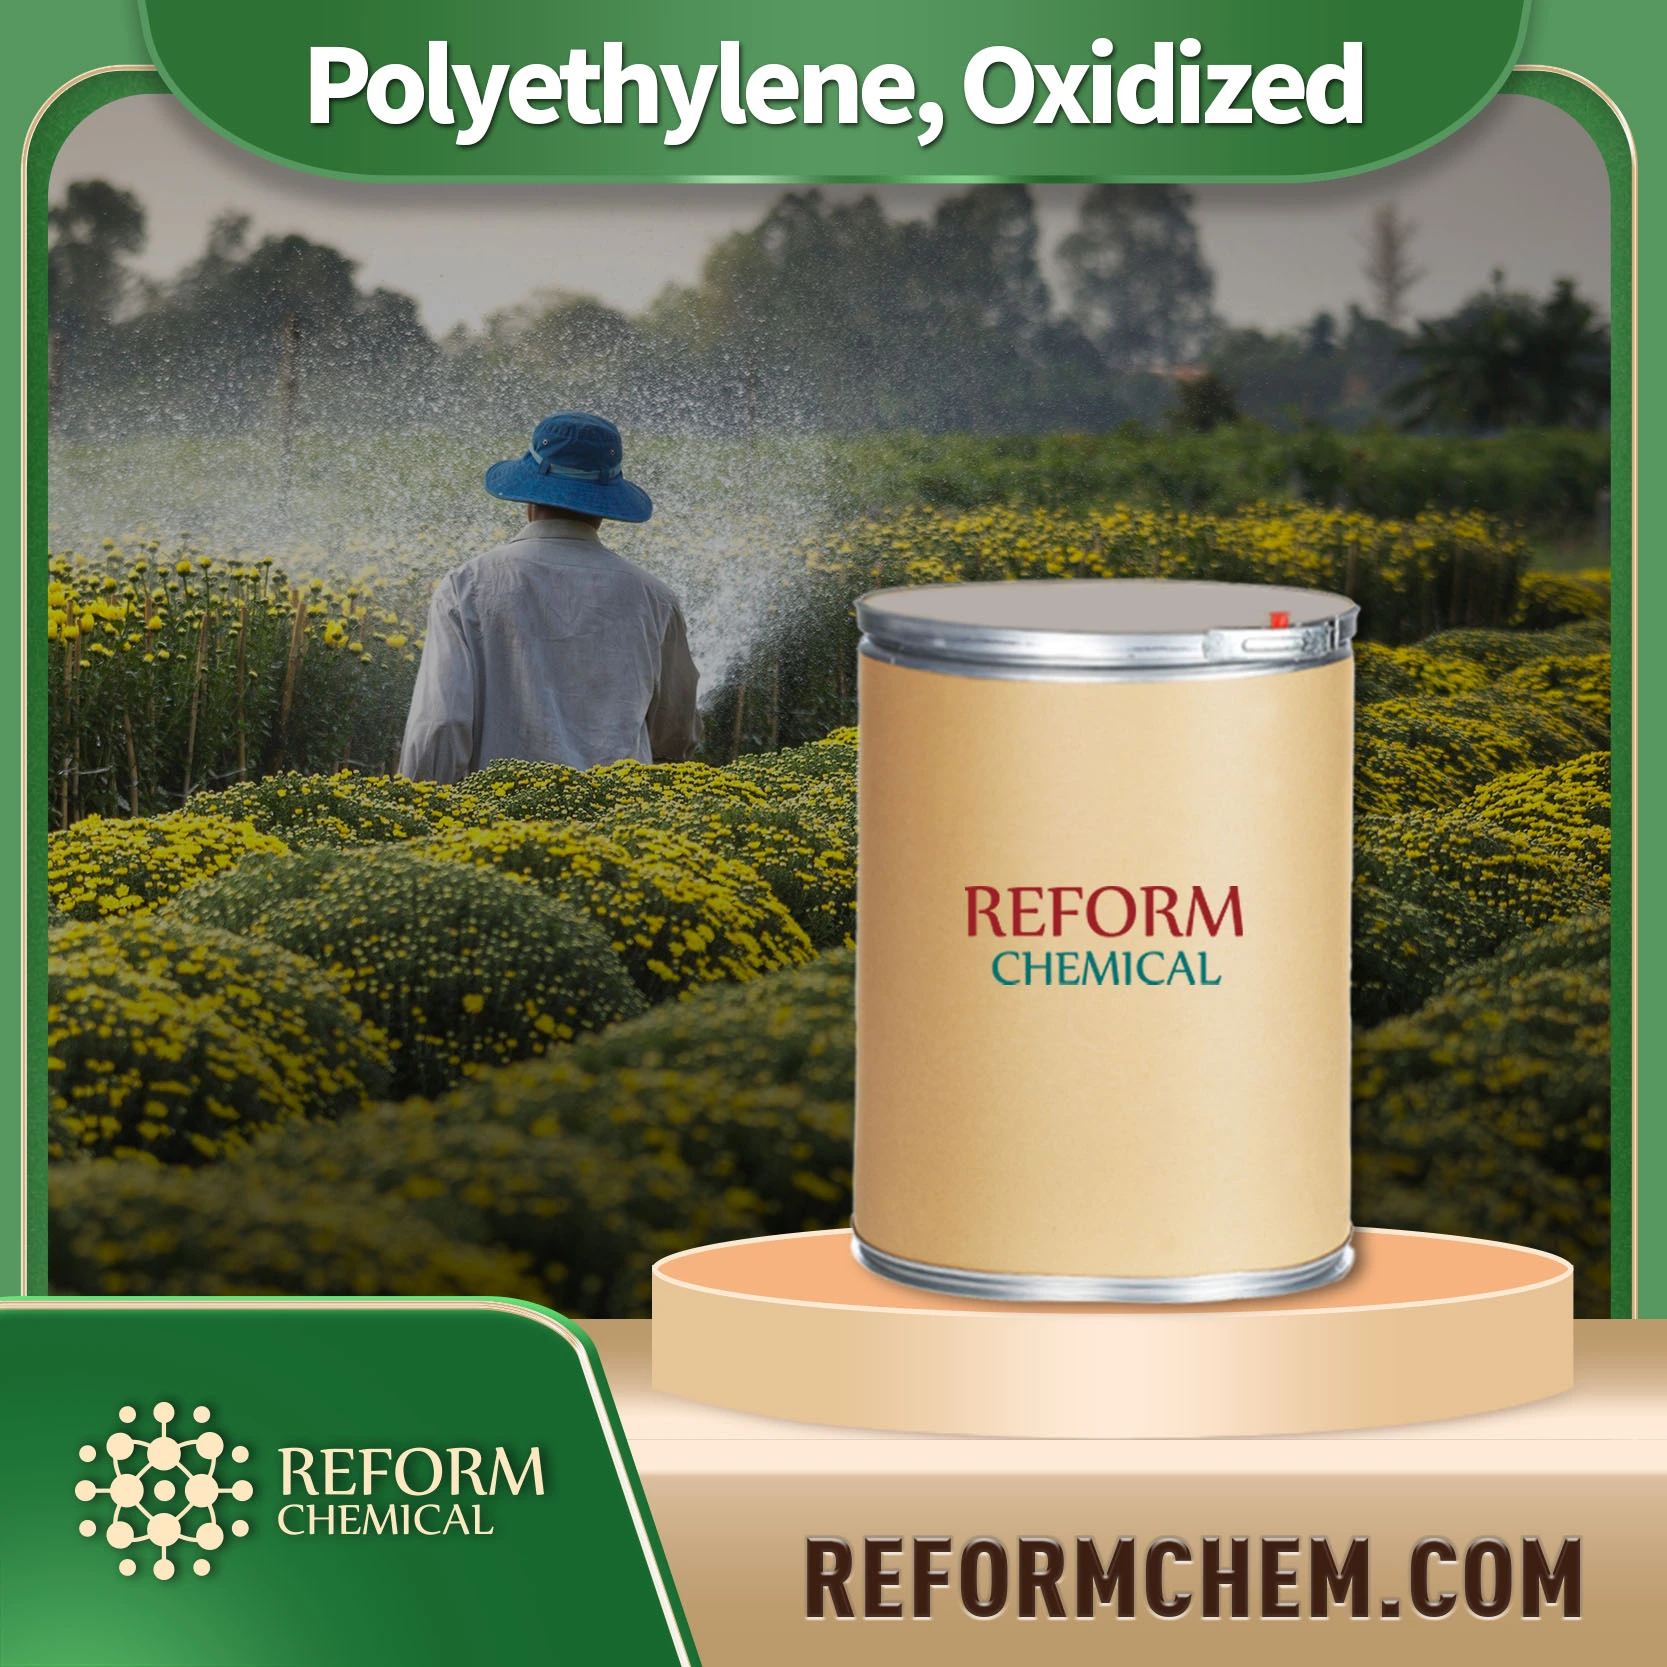 Polyethylene, Oxidized